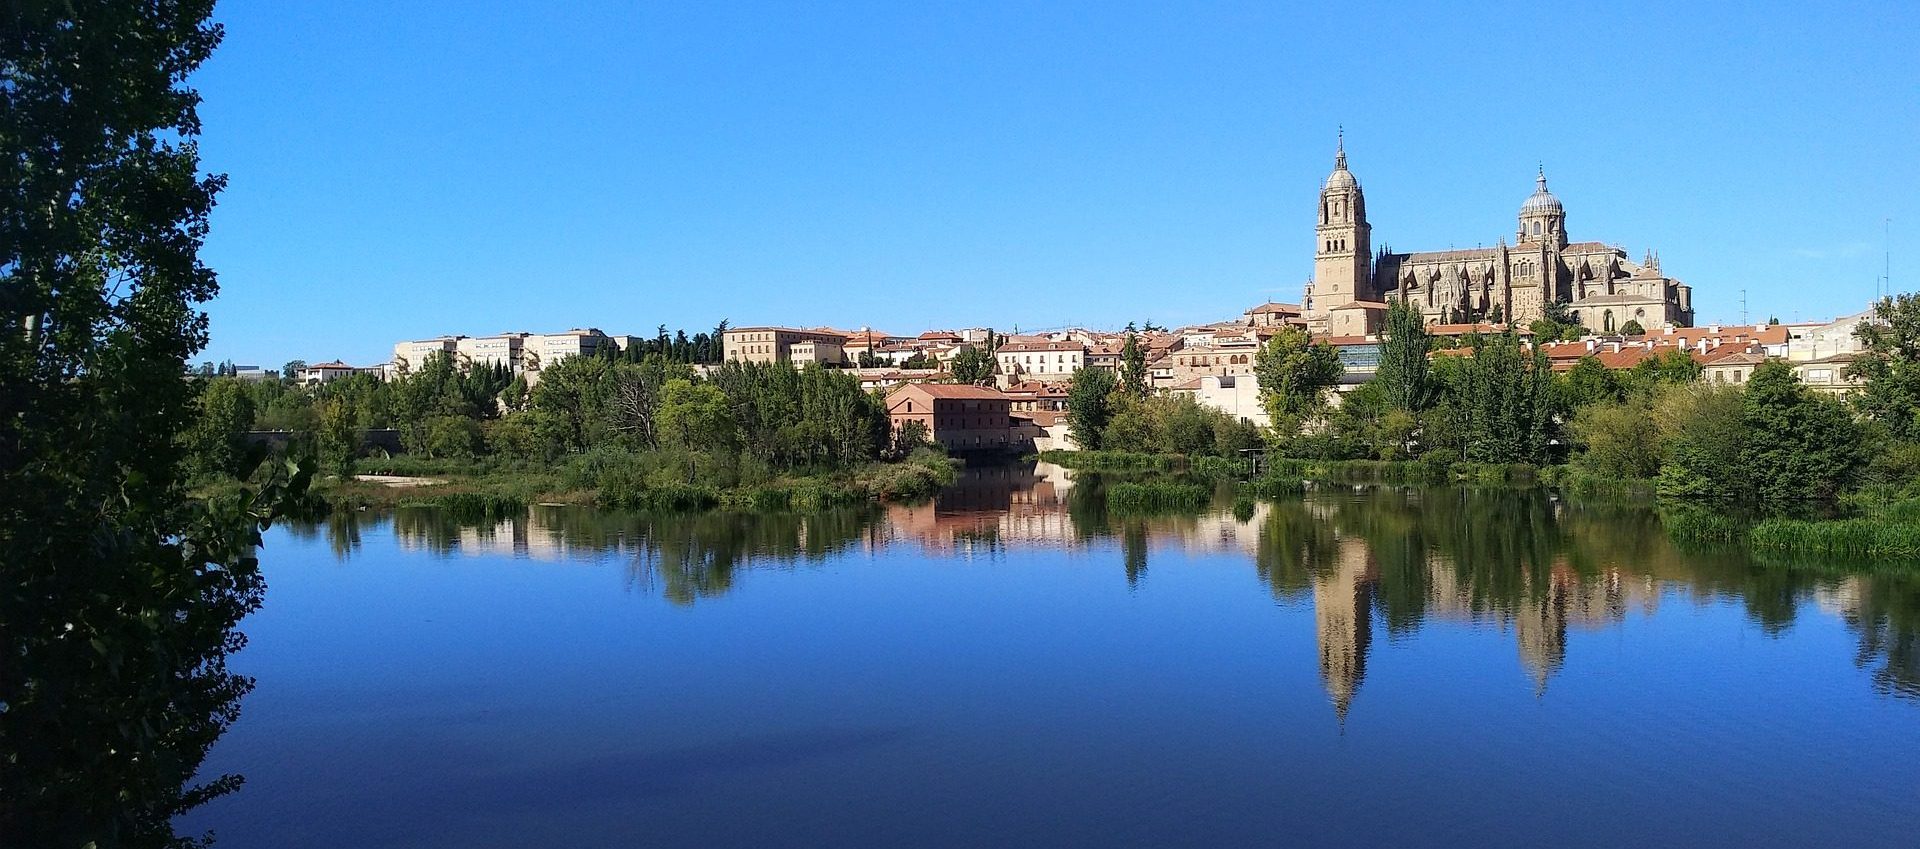 Salamanca speglas i Dourofloden